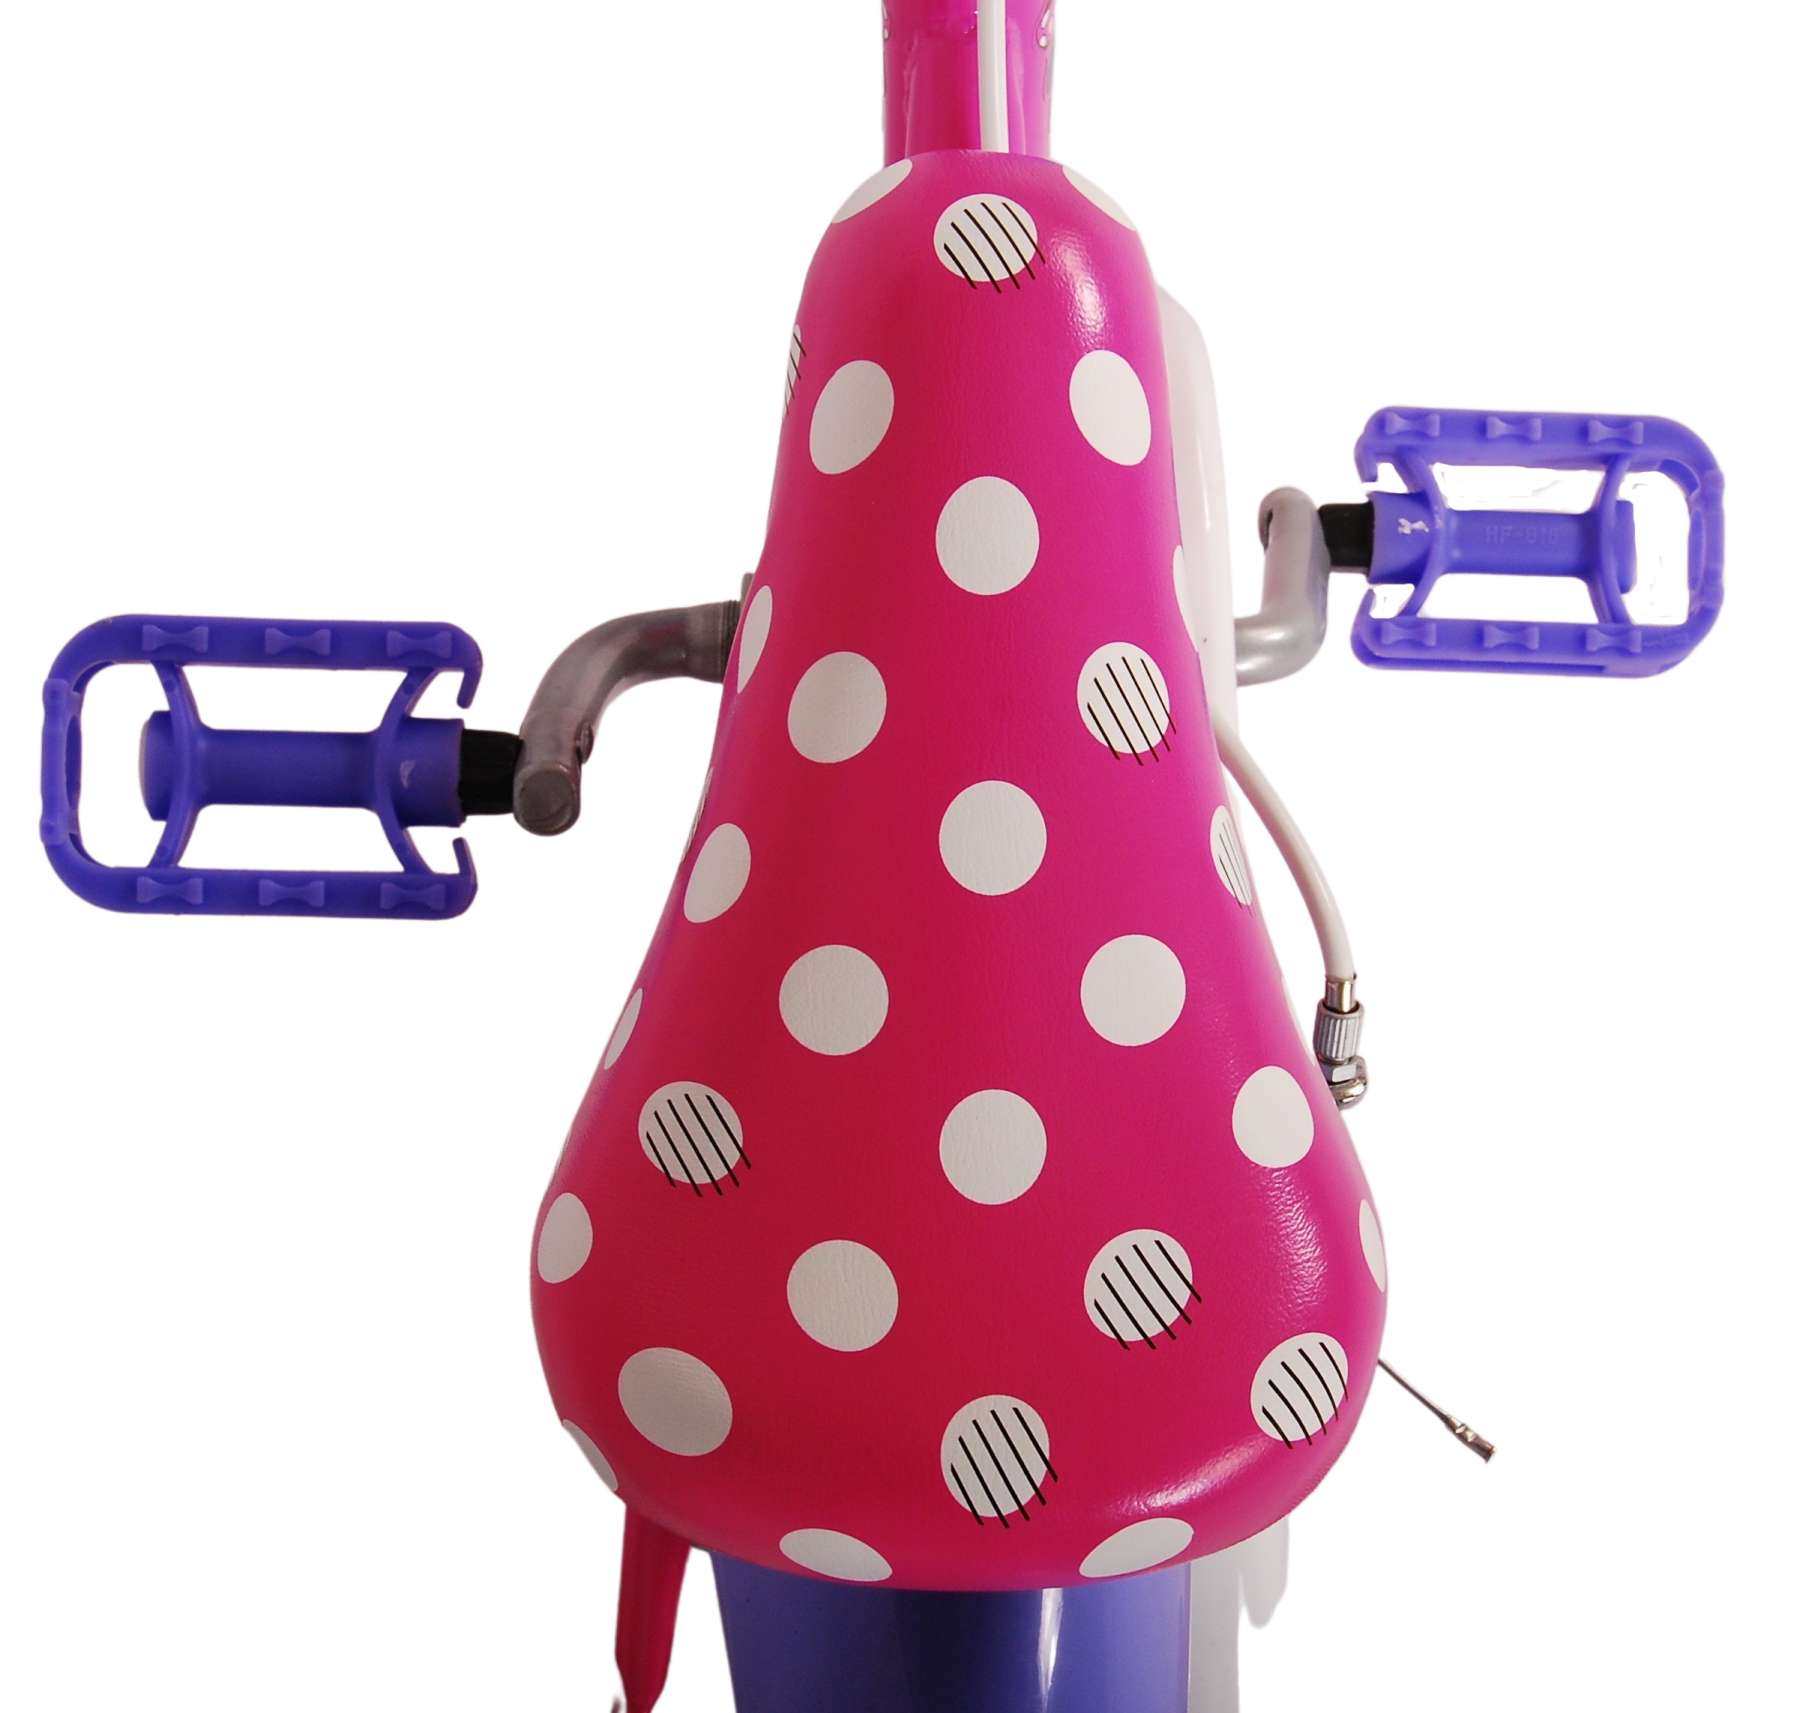 Kinderfahrrad Disney Minnie für Mädchen 12 Zoll Kinderrad in Rosa